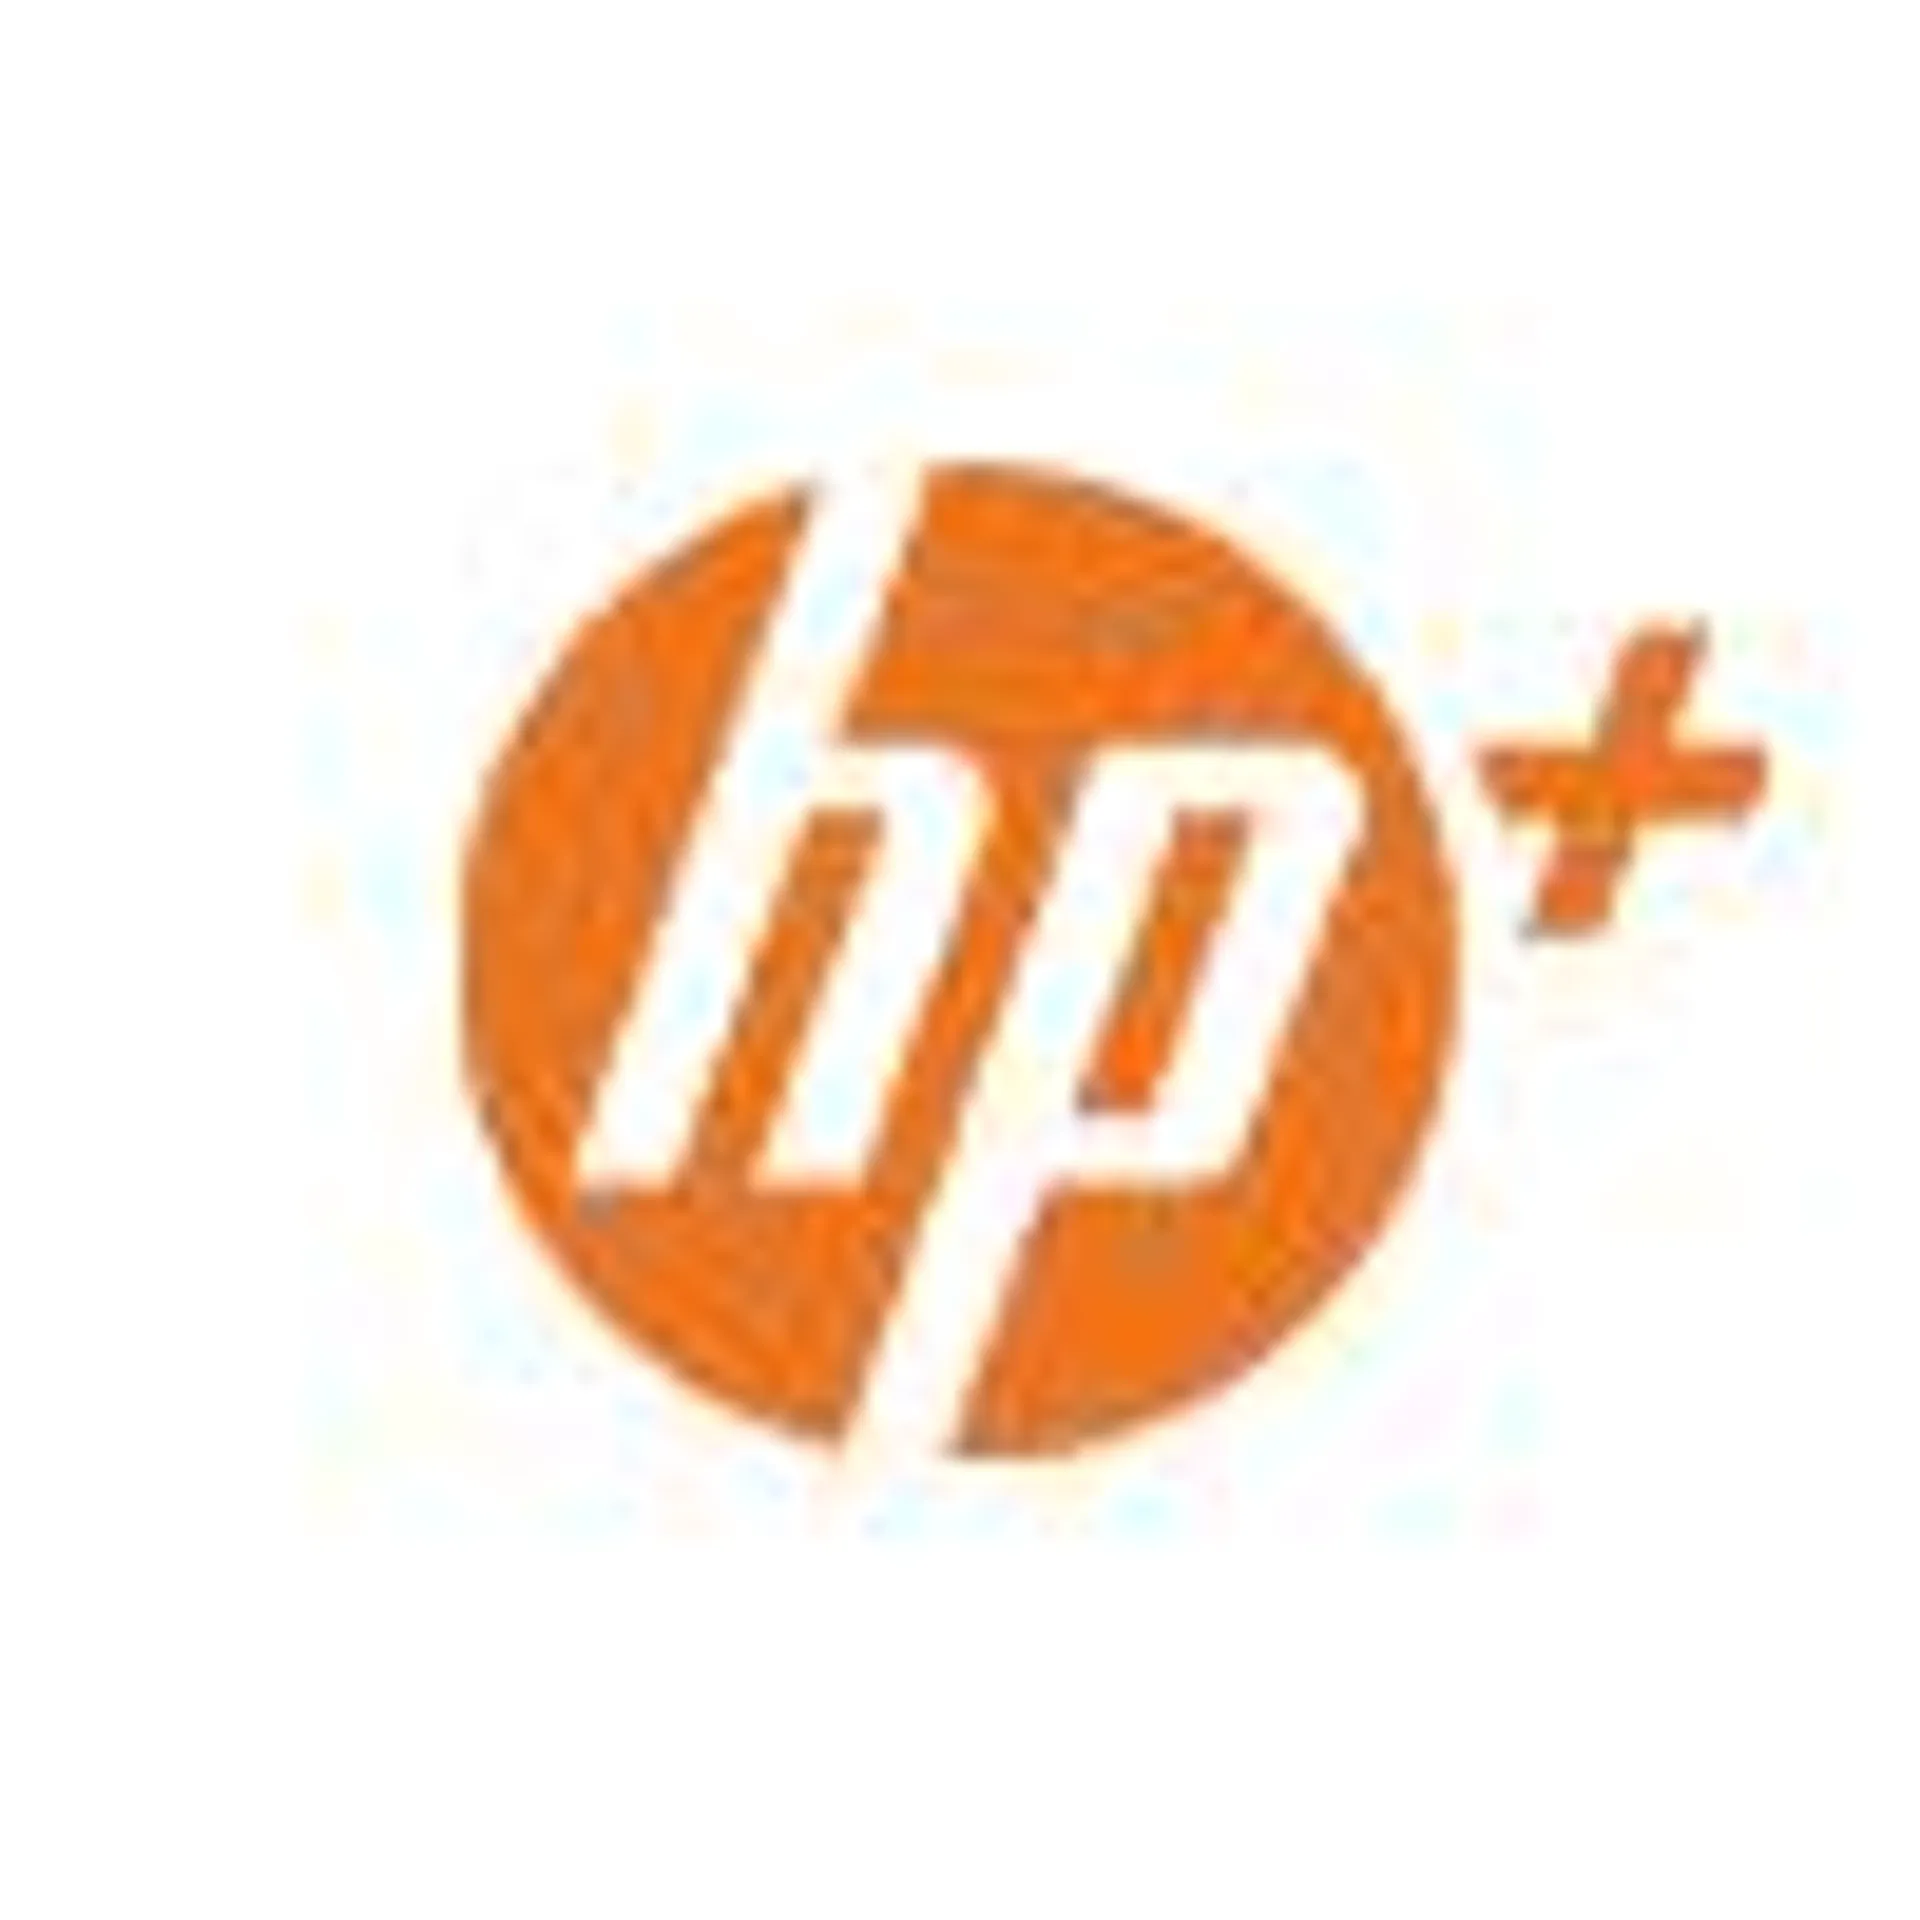 HP LaserJet M209dwe HP+ Wireless Black & White Printer with 6 Months Instant Ink & 1 Year Extra Warranty